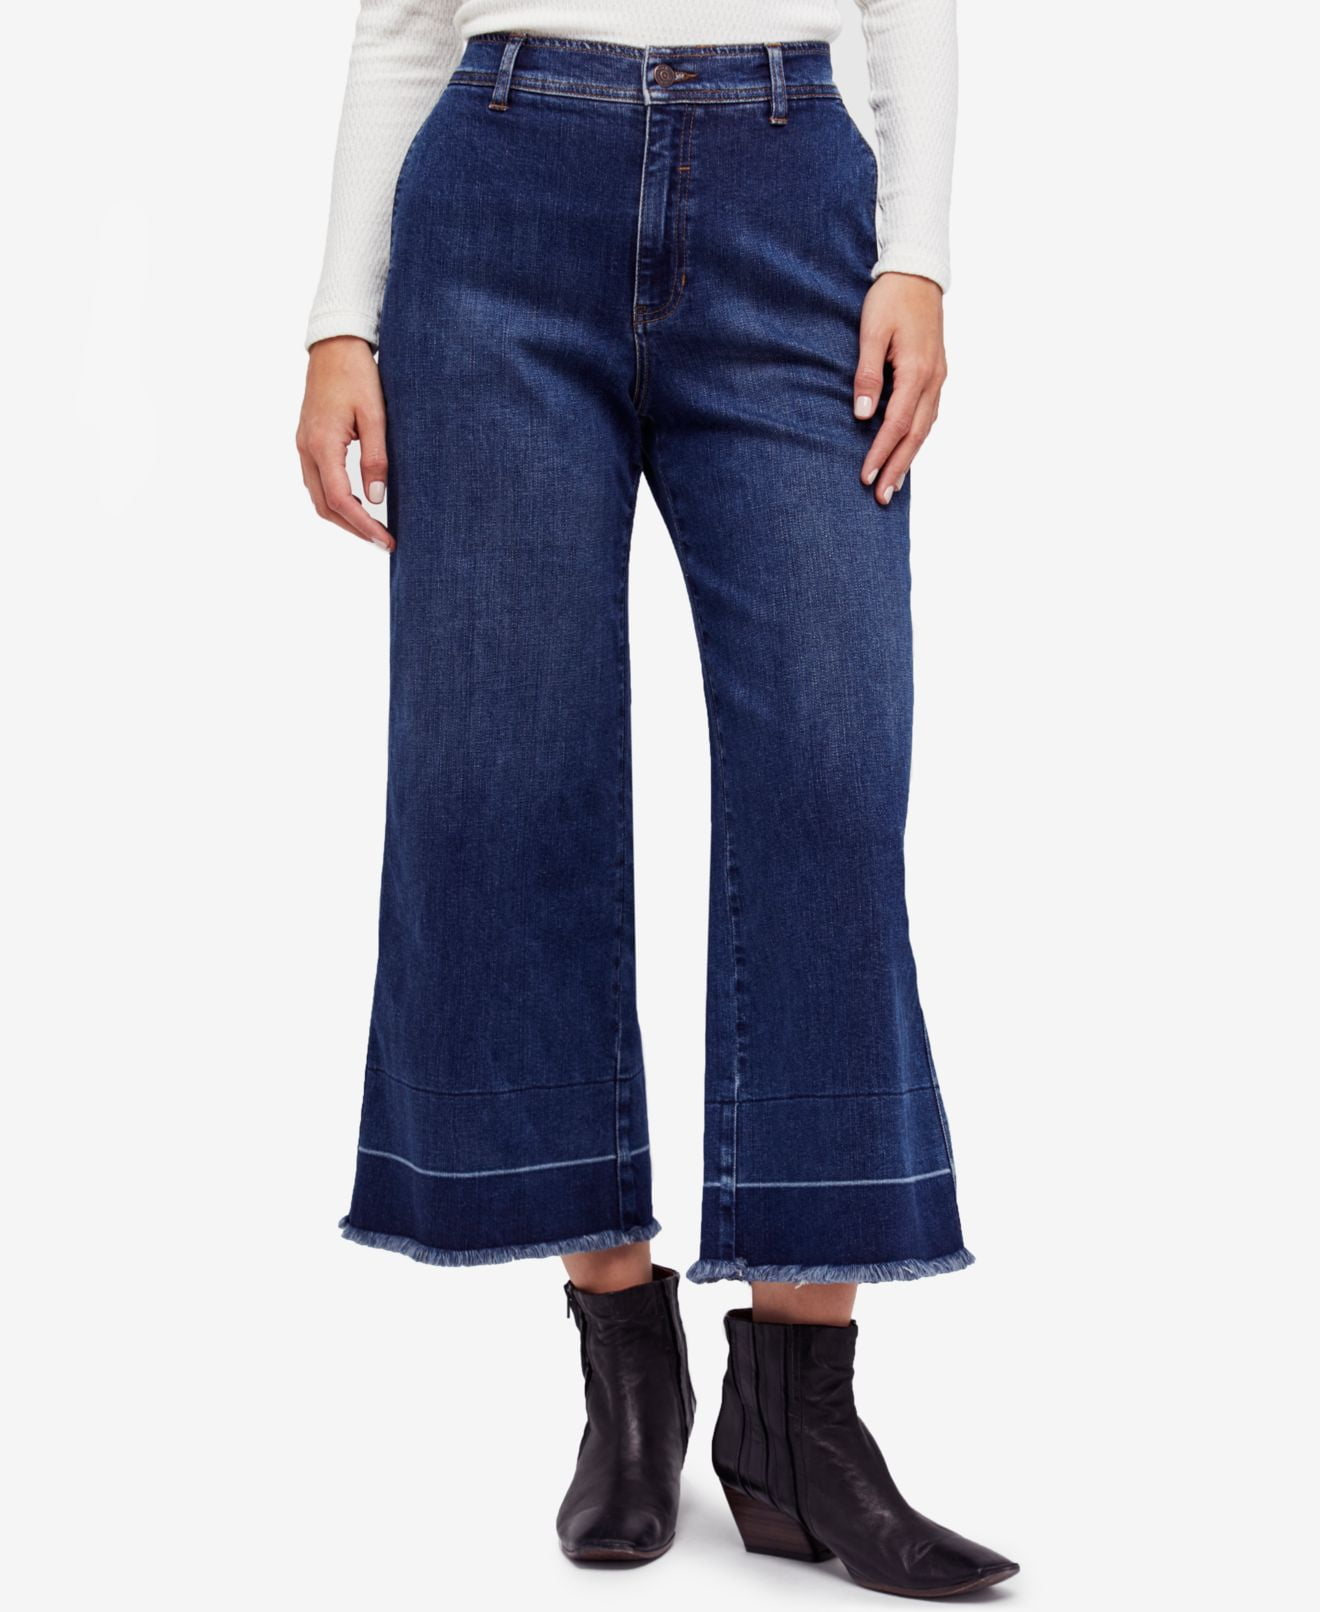 Free People - Women's Cropped Wide Leg Stretch Jeans 28 - Walmart.com ...